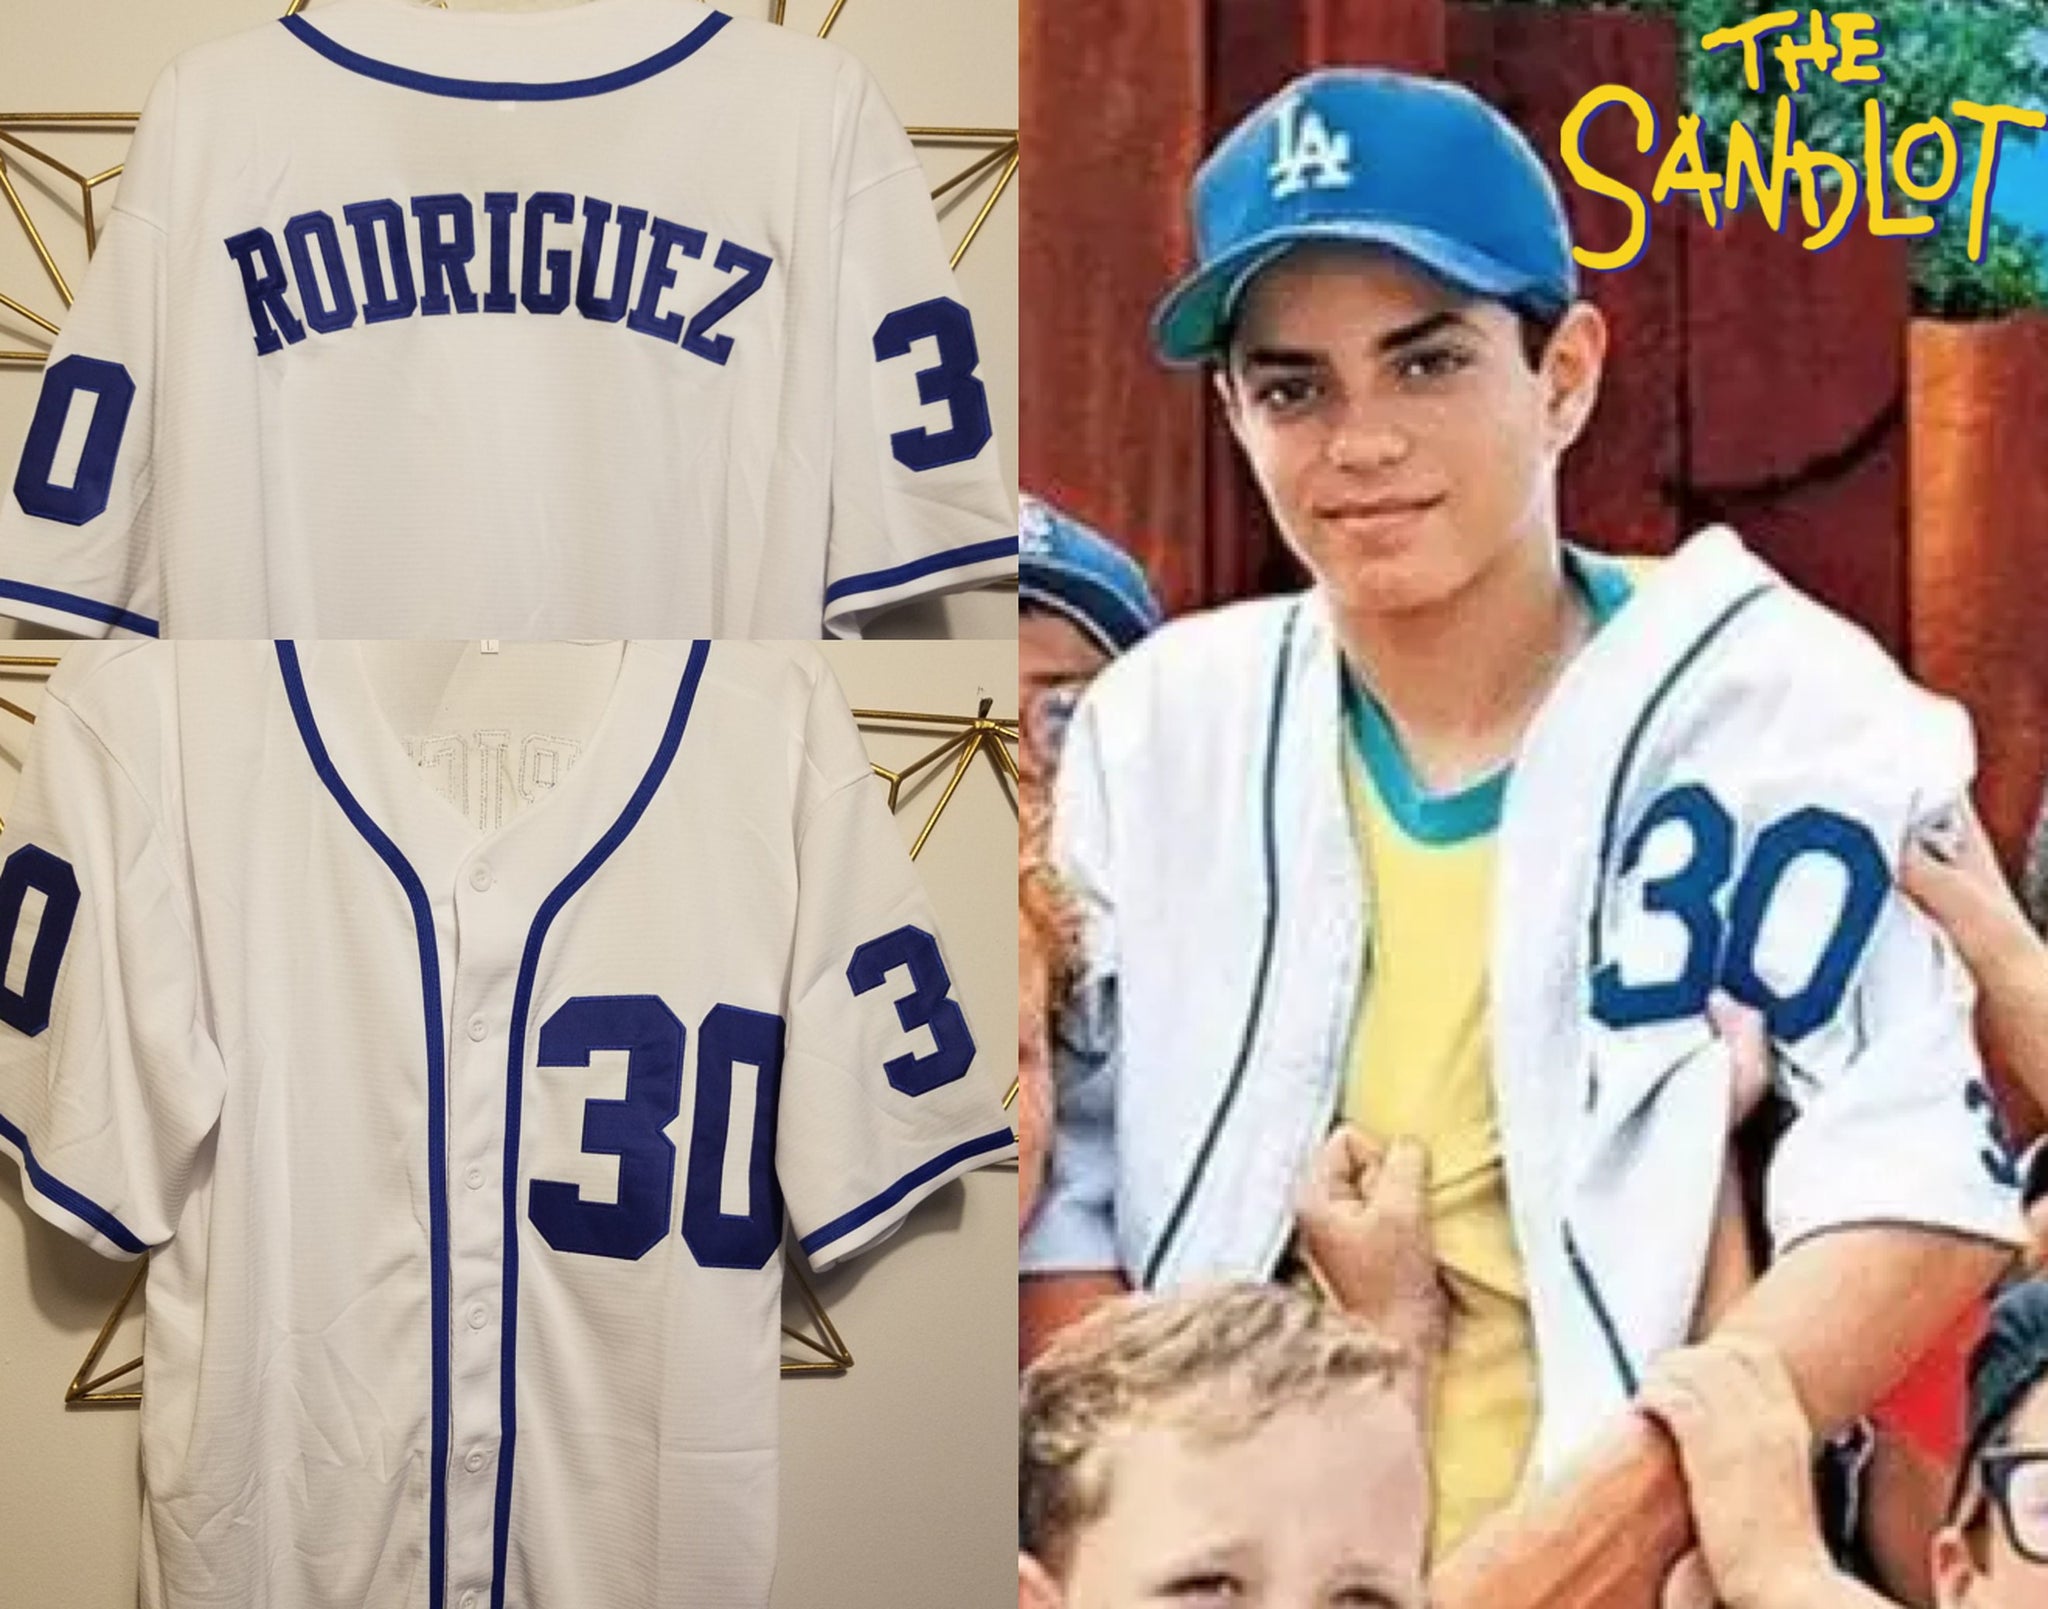 MESOSPERO The Sandlot Benny The Jet Rodriguez 30 Movie Baseball Jersey for Men S-XXXL Stitched